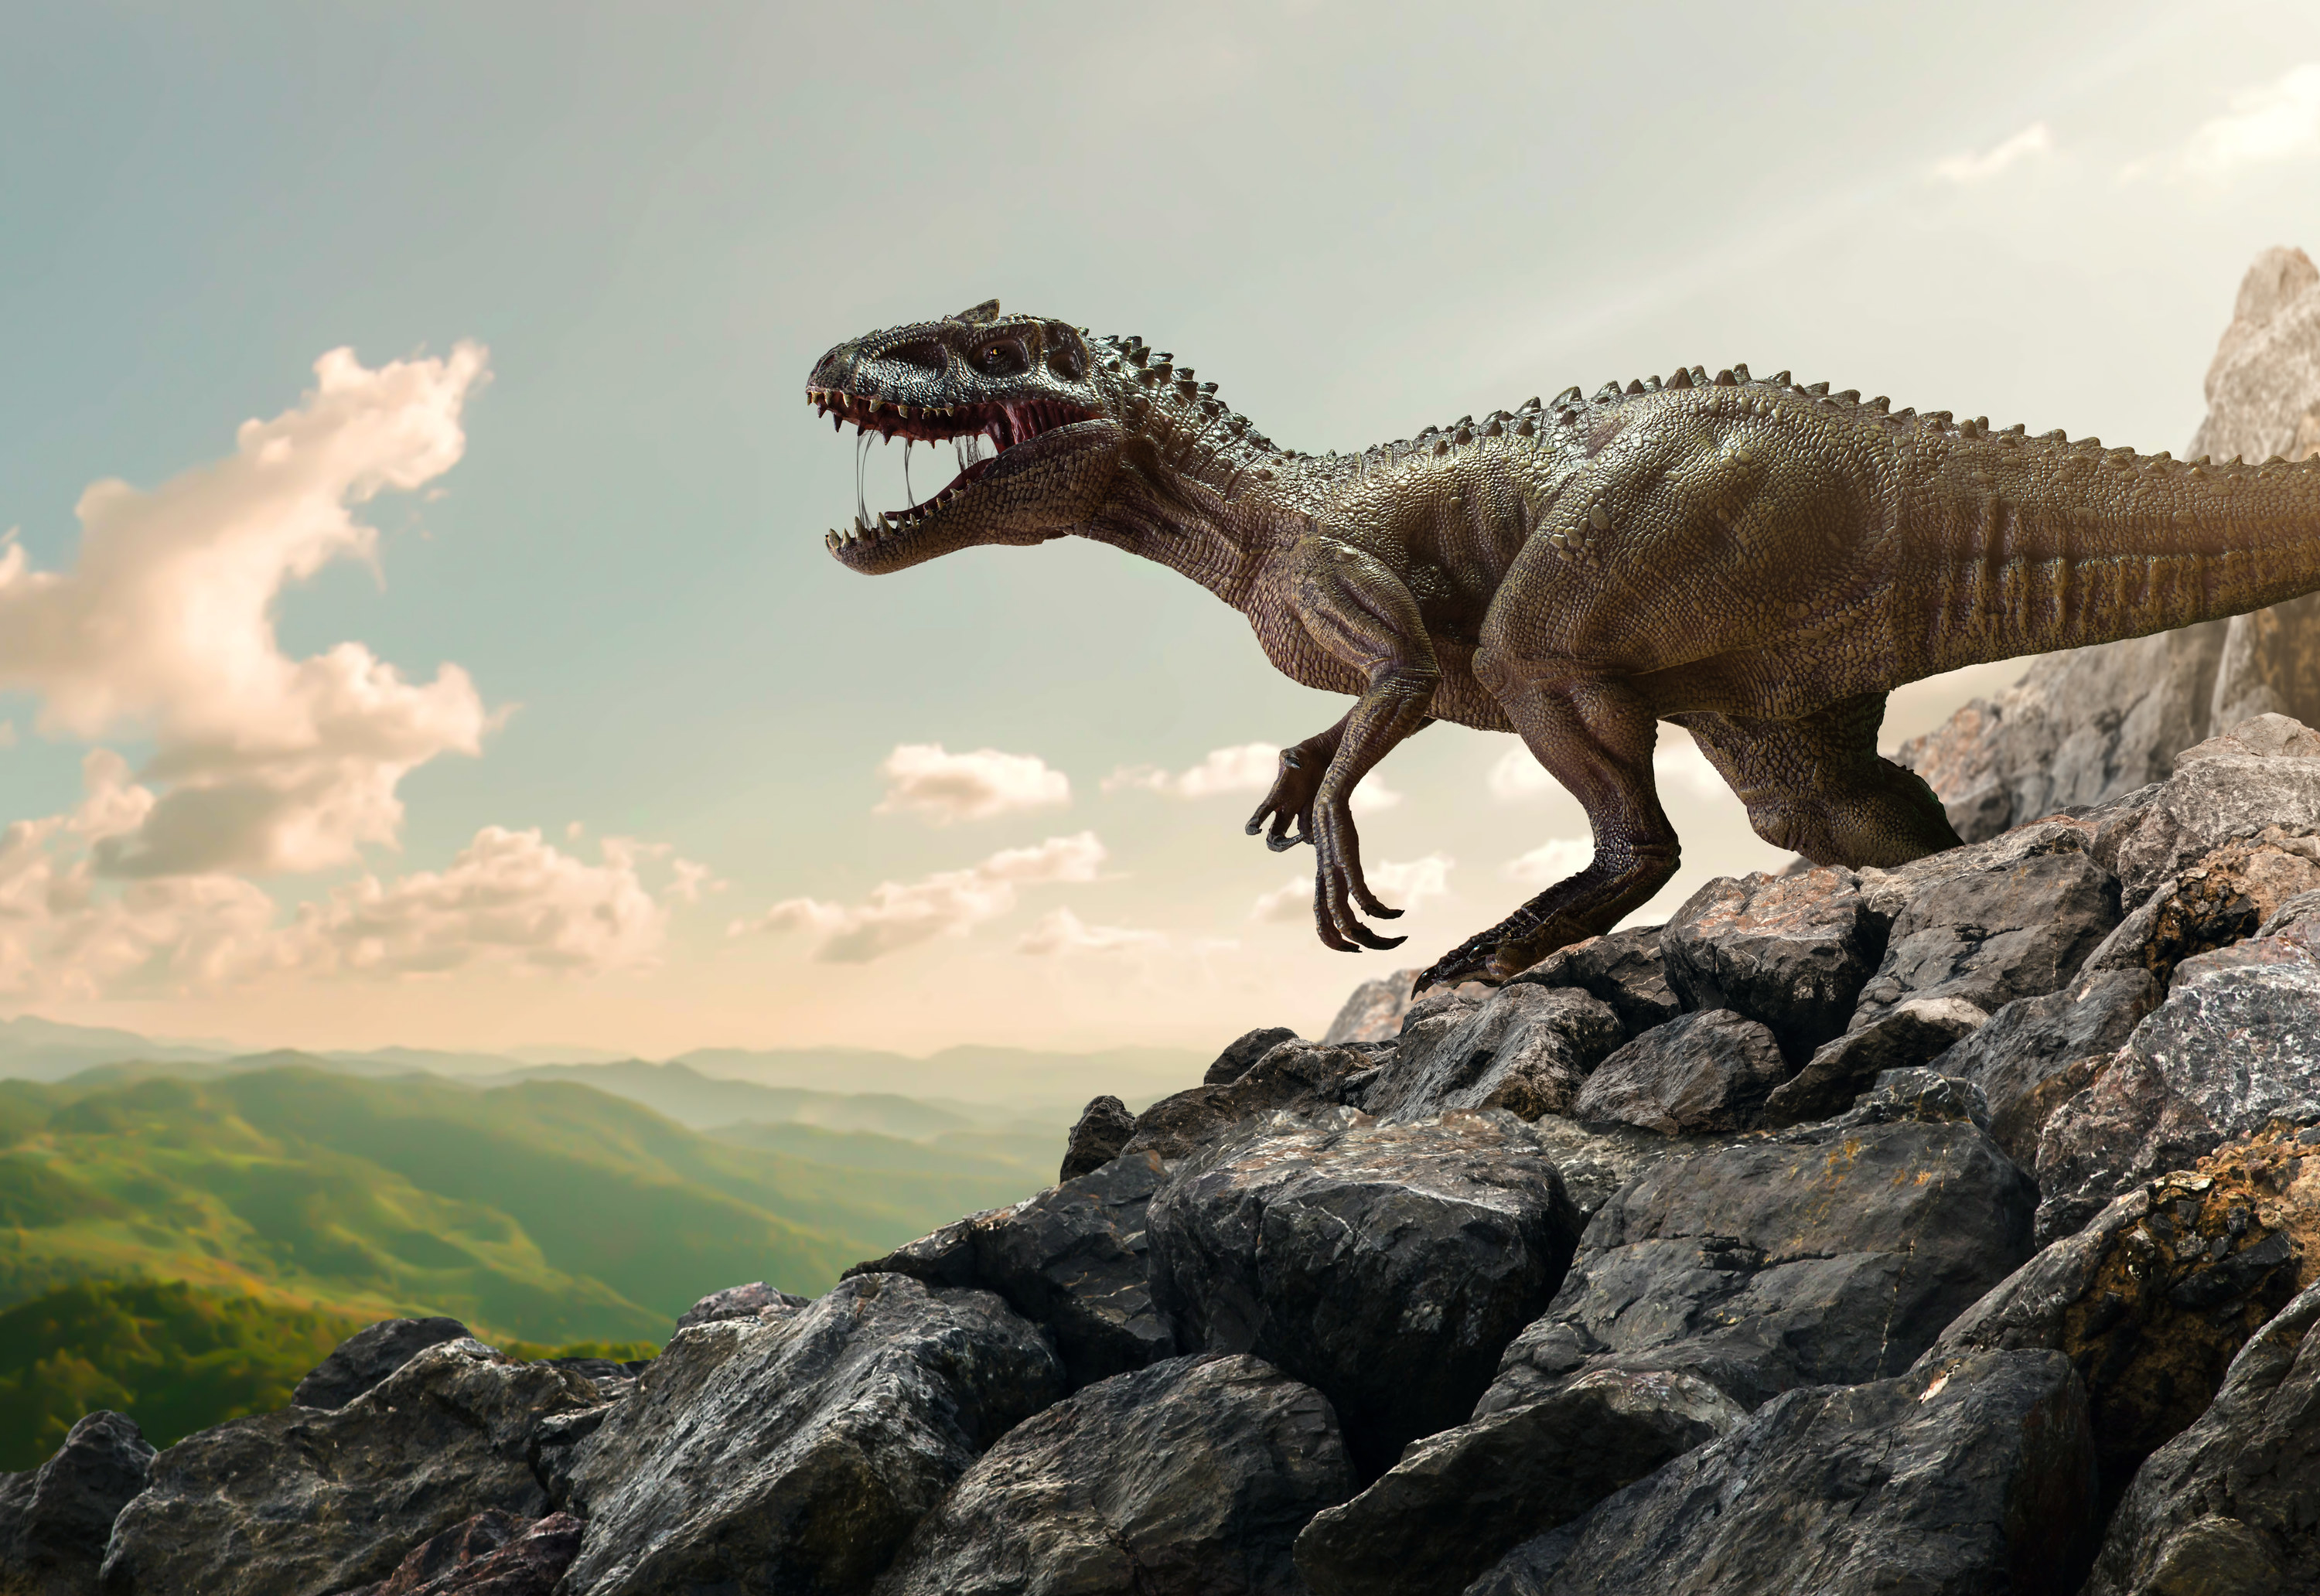 Illustration of a dinosaur on a mountain